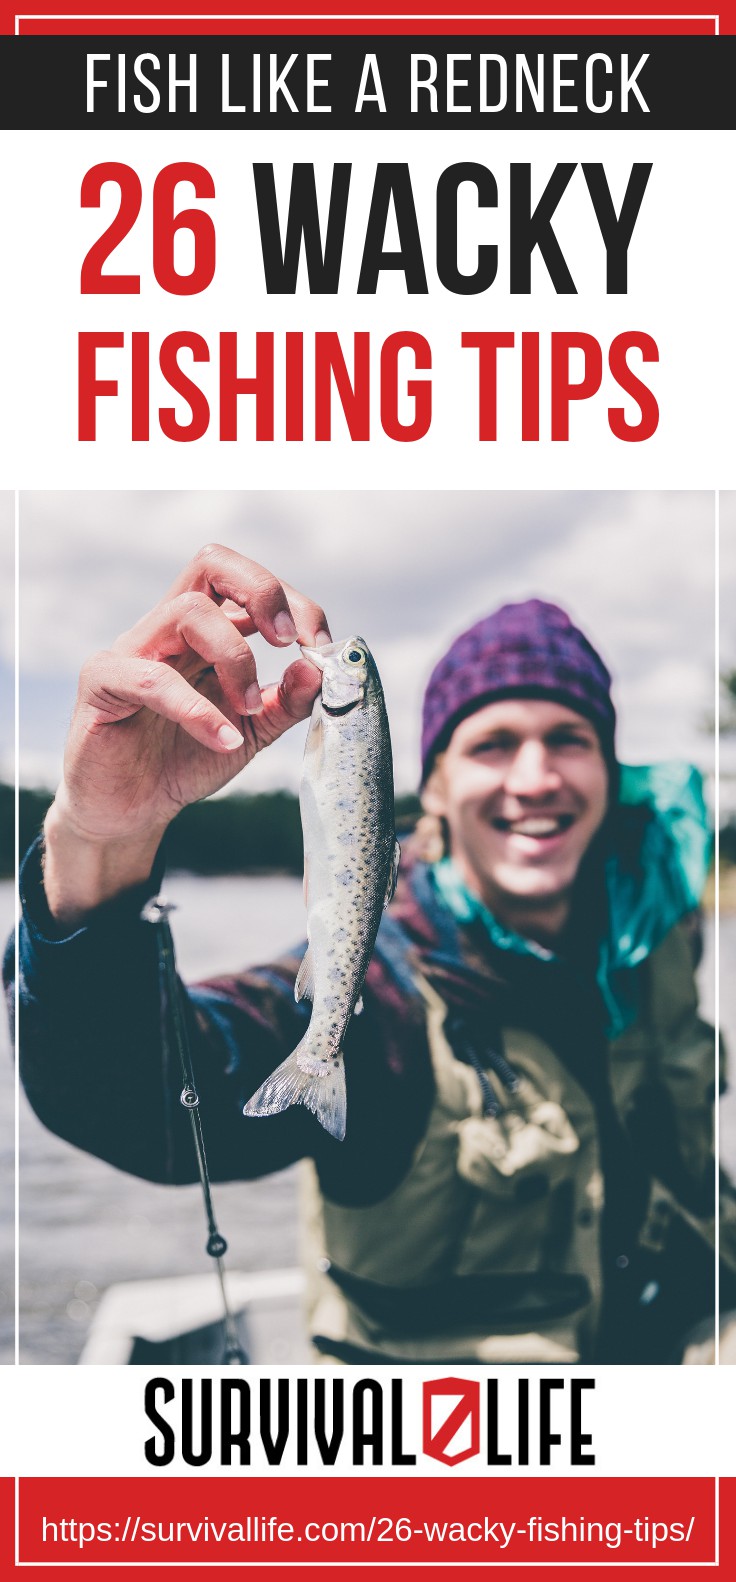 Wacky Fishing Tips To Help You Fish Like A Redneck | https://survivallife.com/26-wacky-fishing-tips/